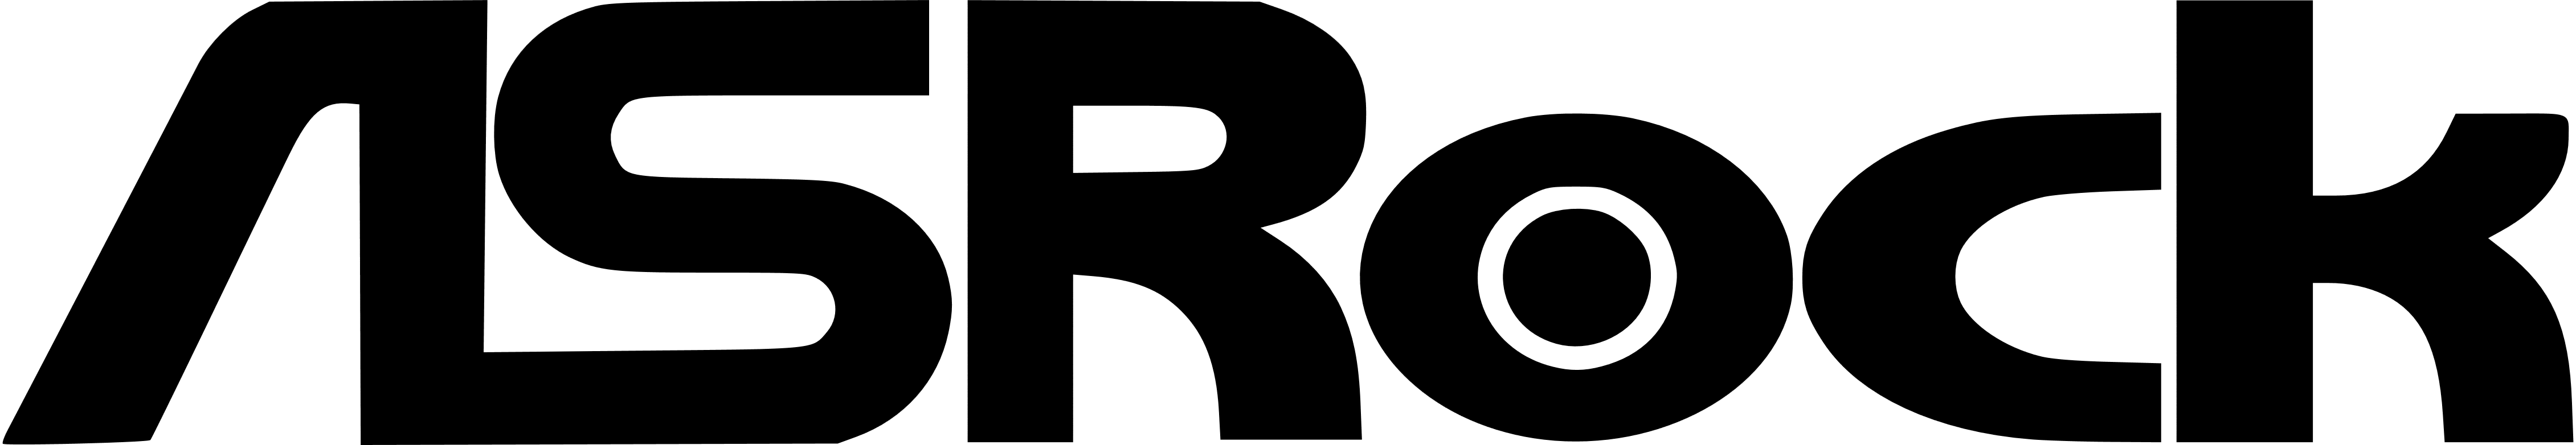 ASRock Logo.png